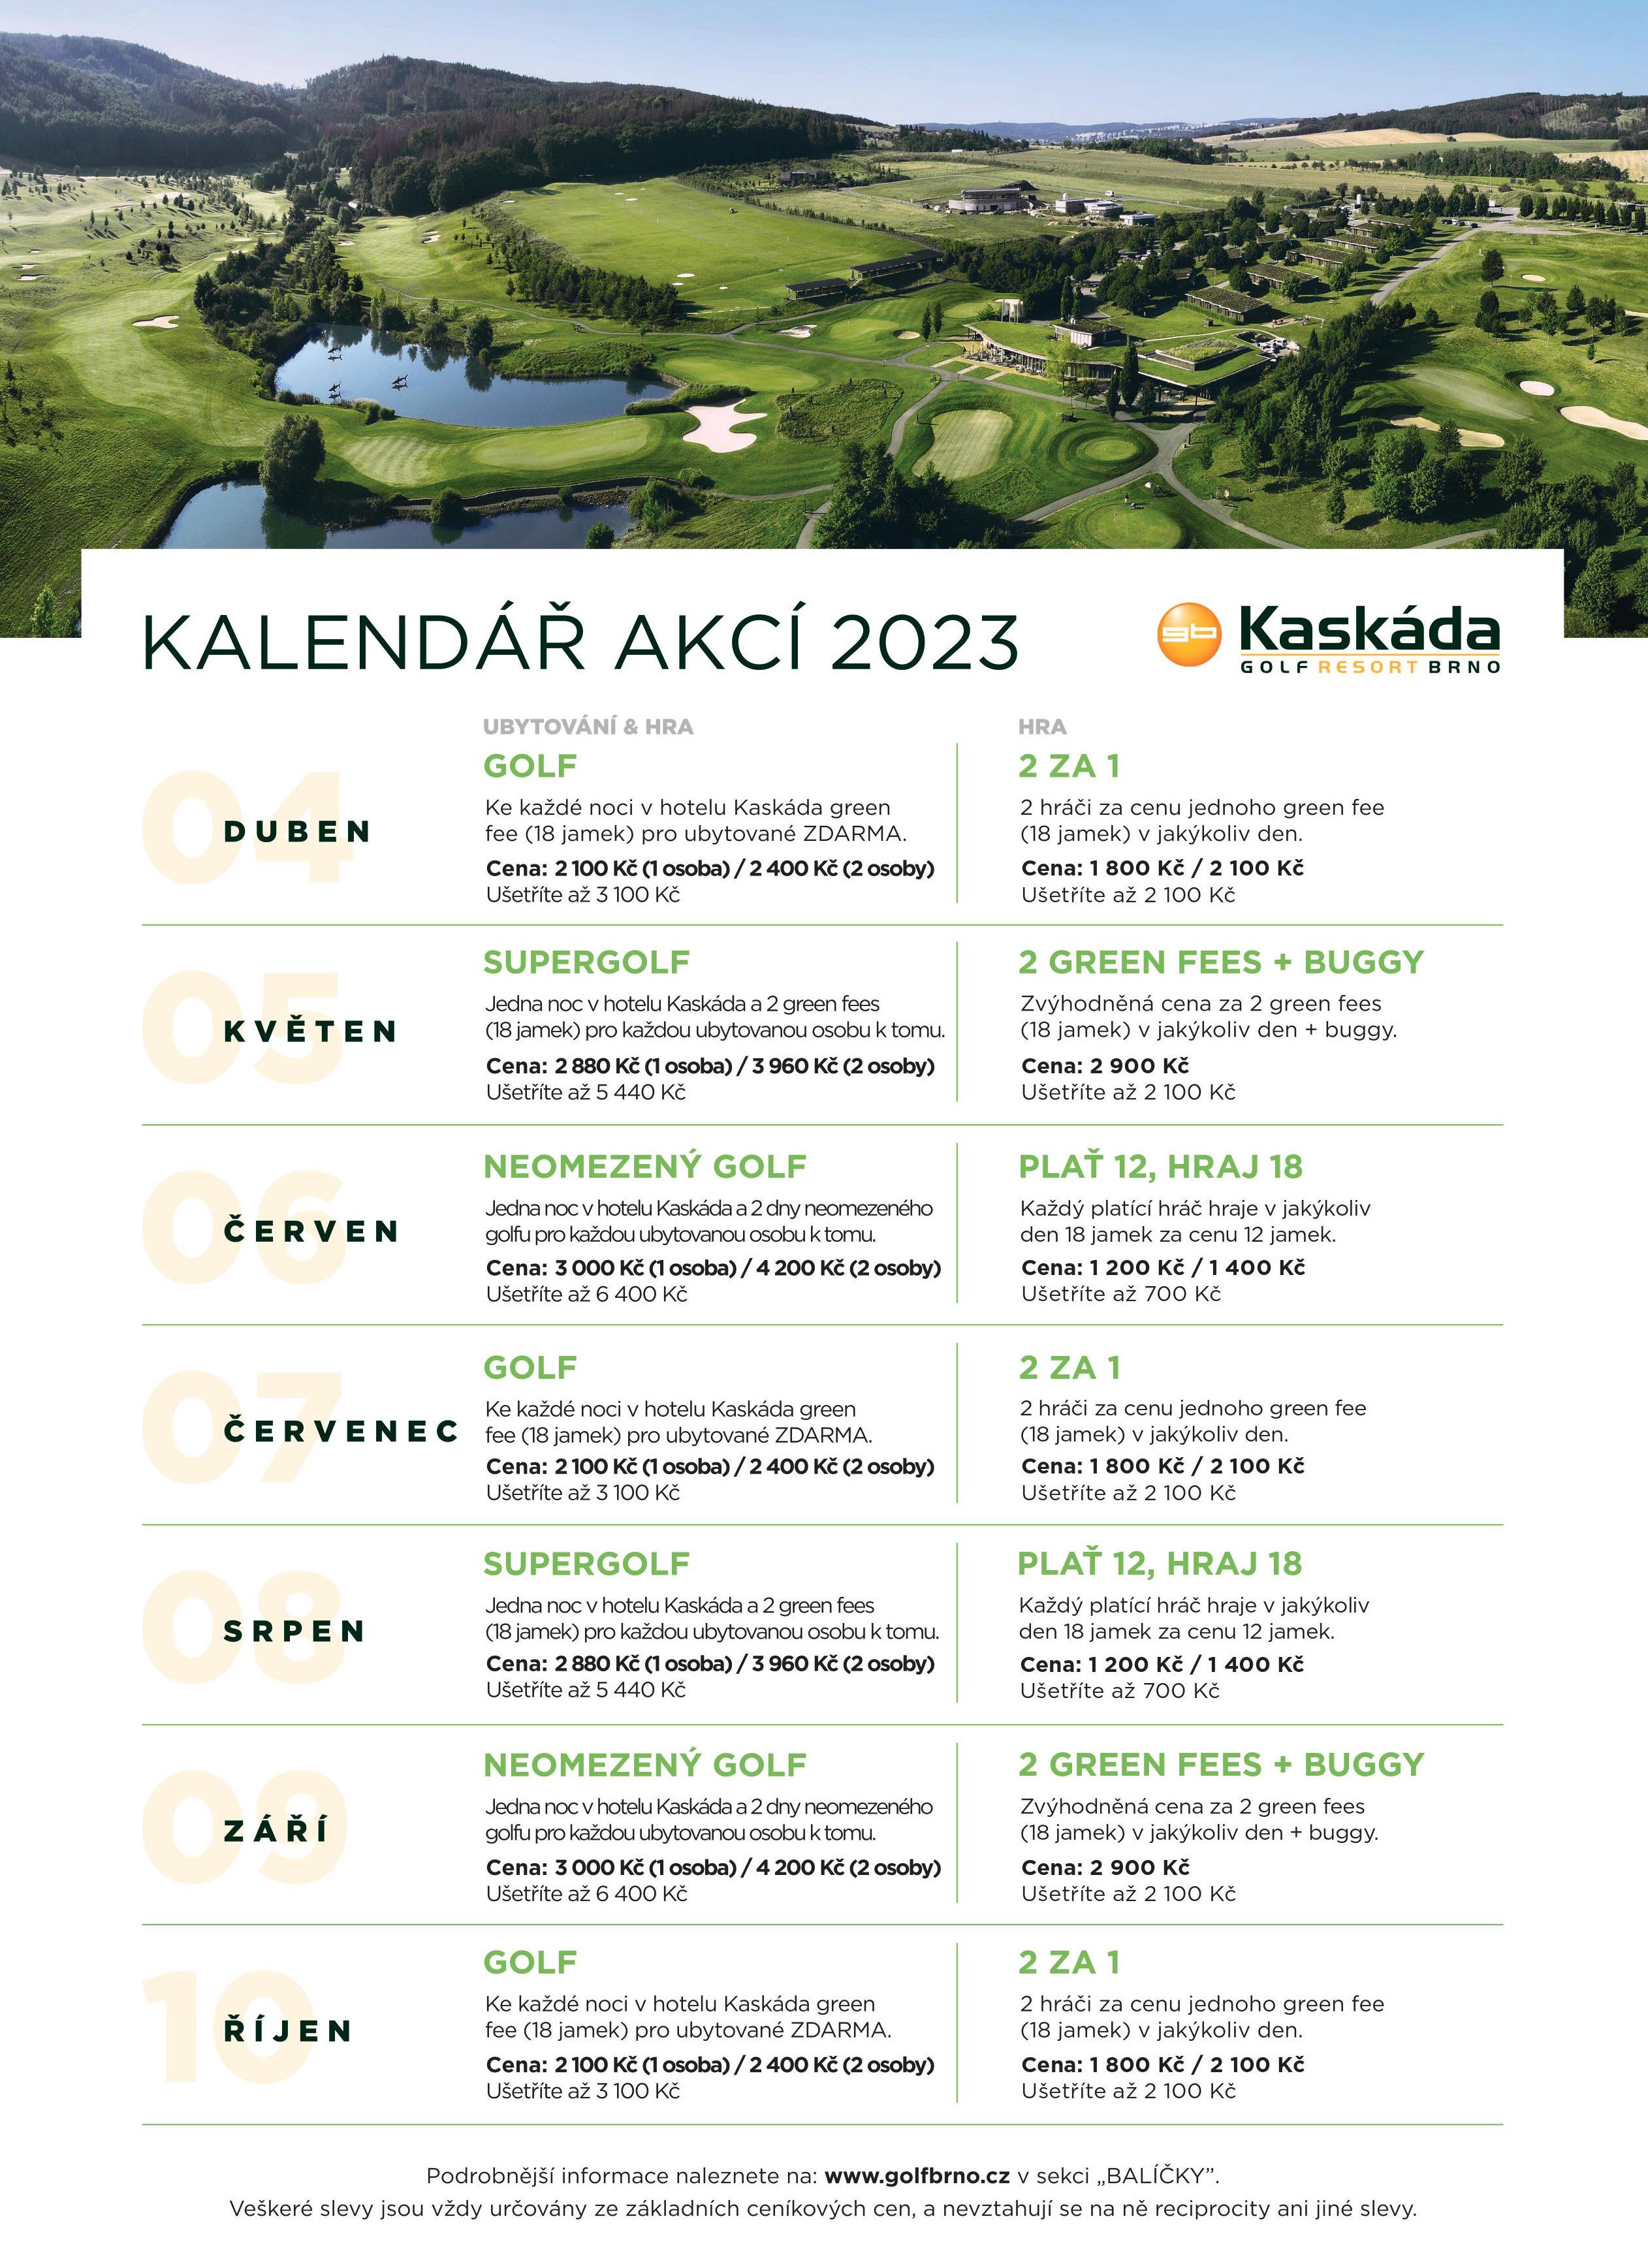 KASKADA_KALENDAR_210x297mm_2023_OPRAVA_TISK.tisk a3